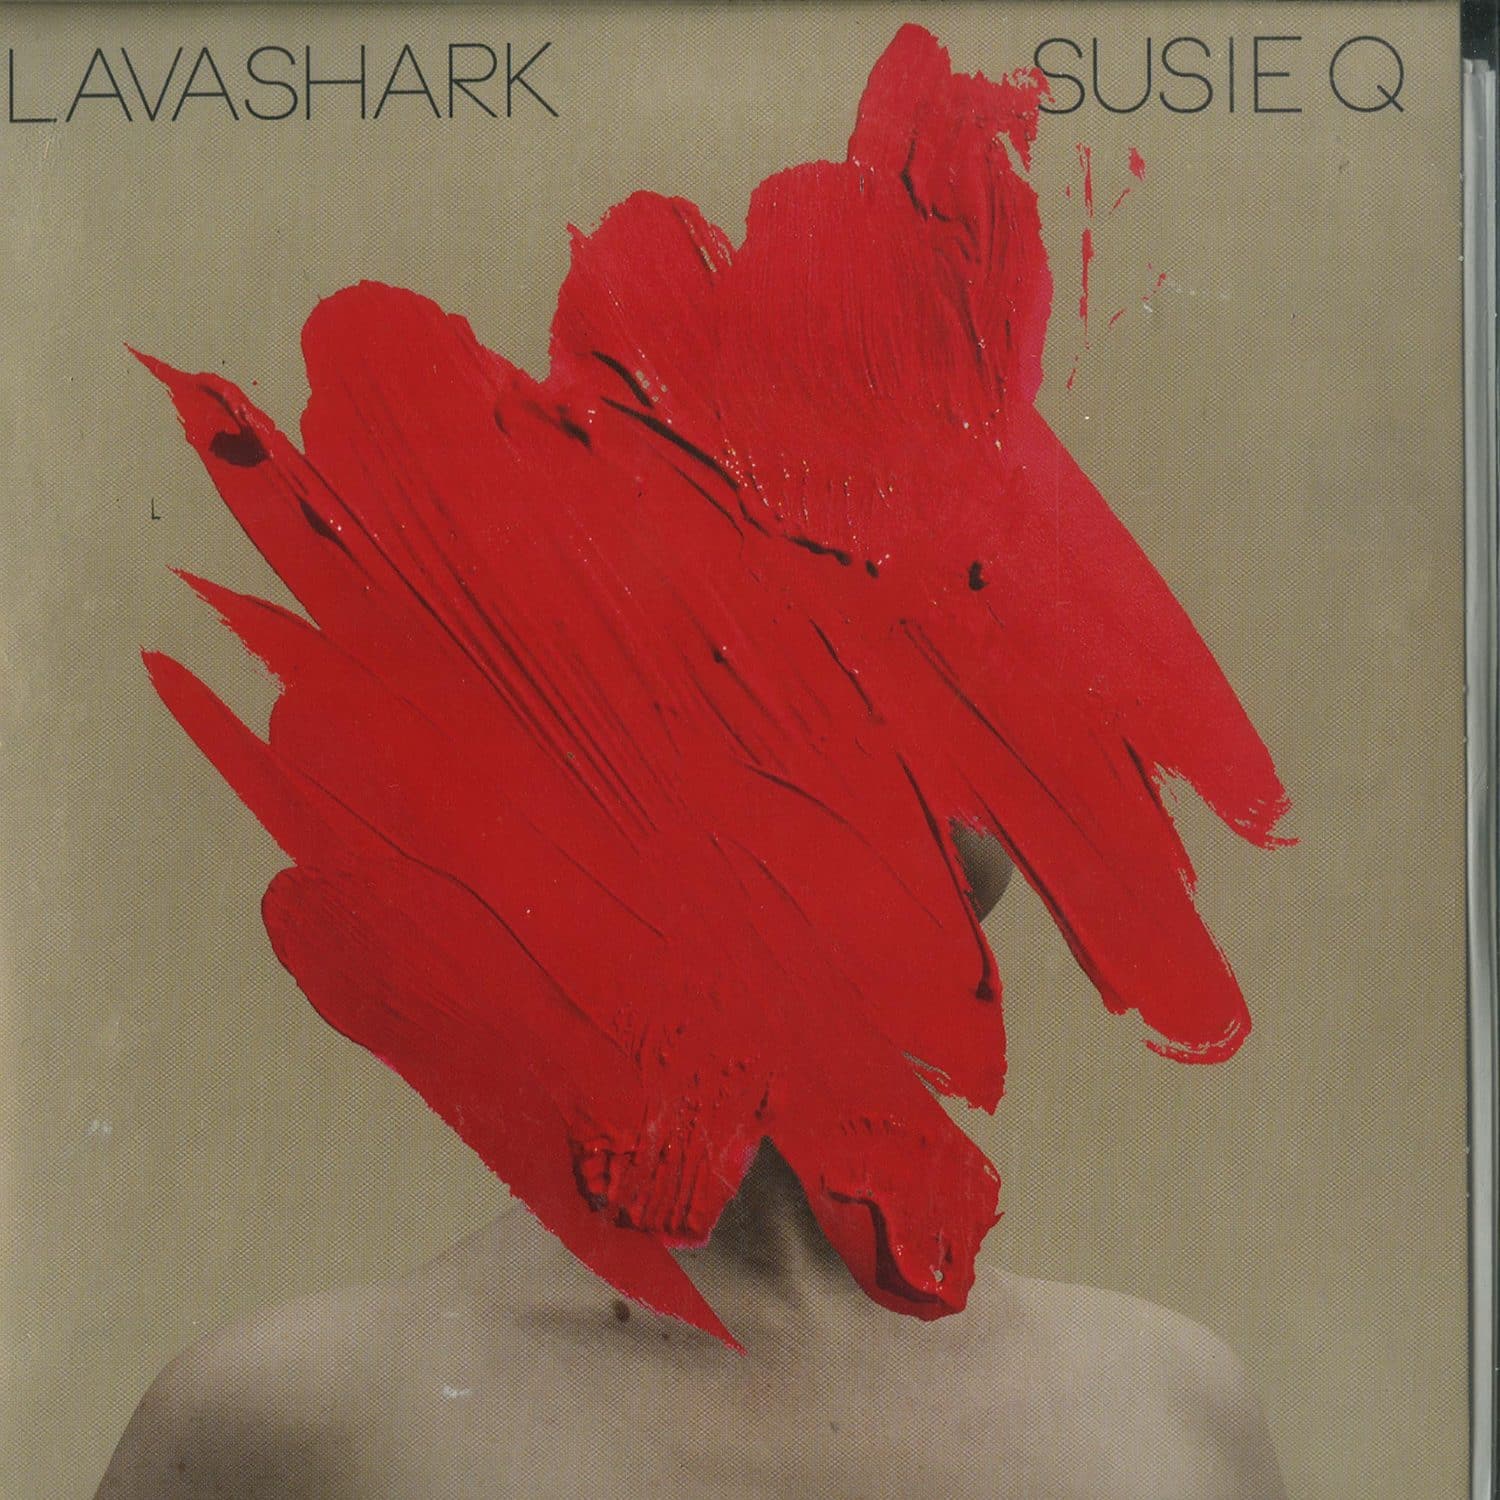 Lavashark - STATE TROOPER / SUSIE Q 